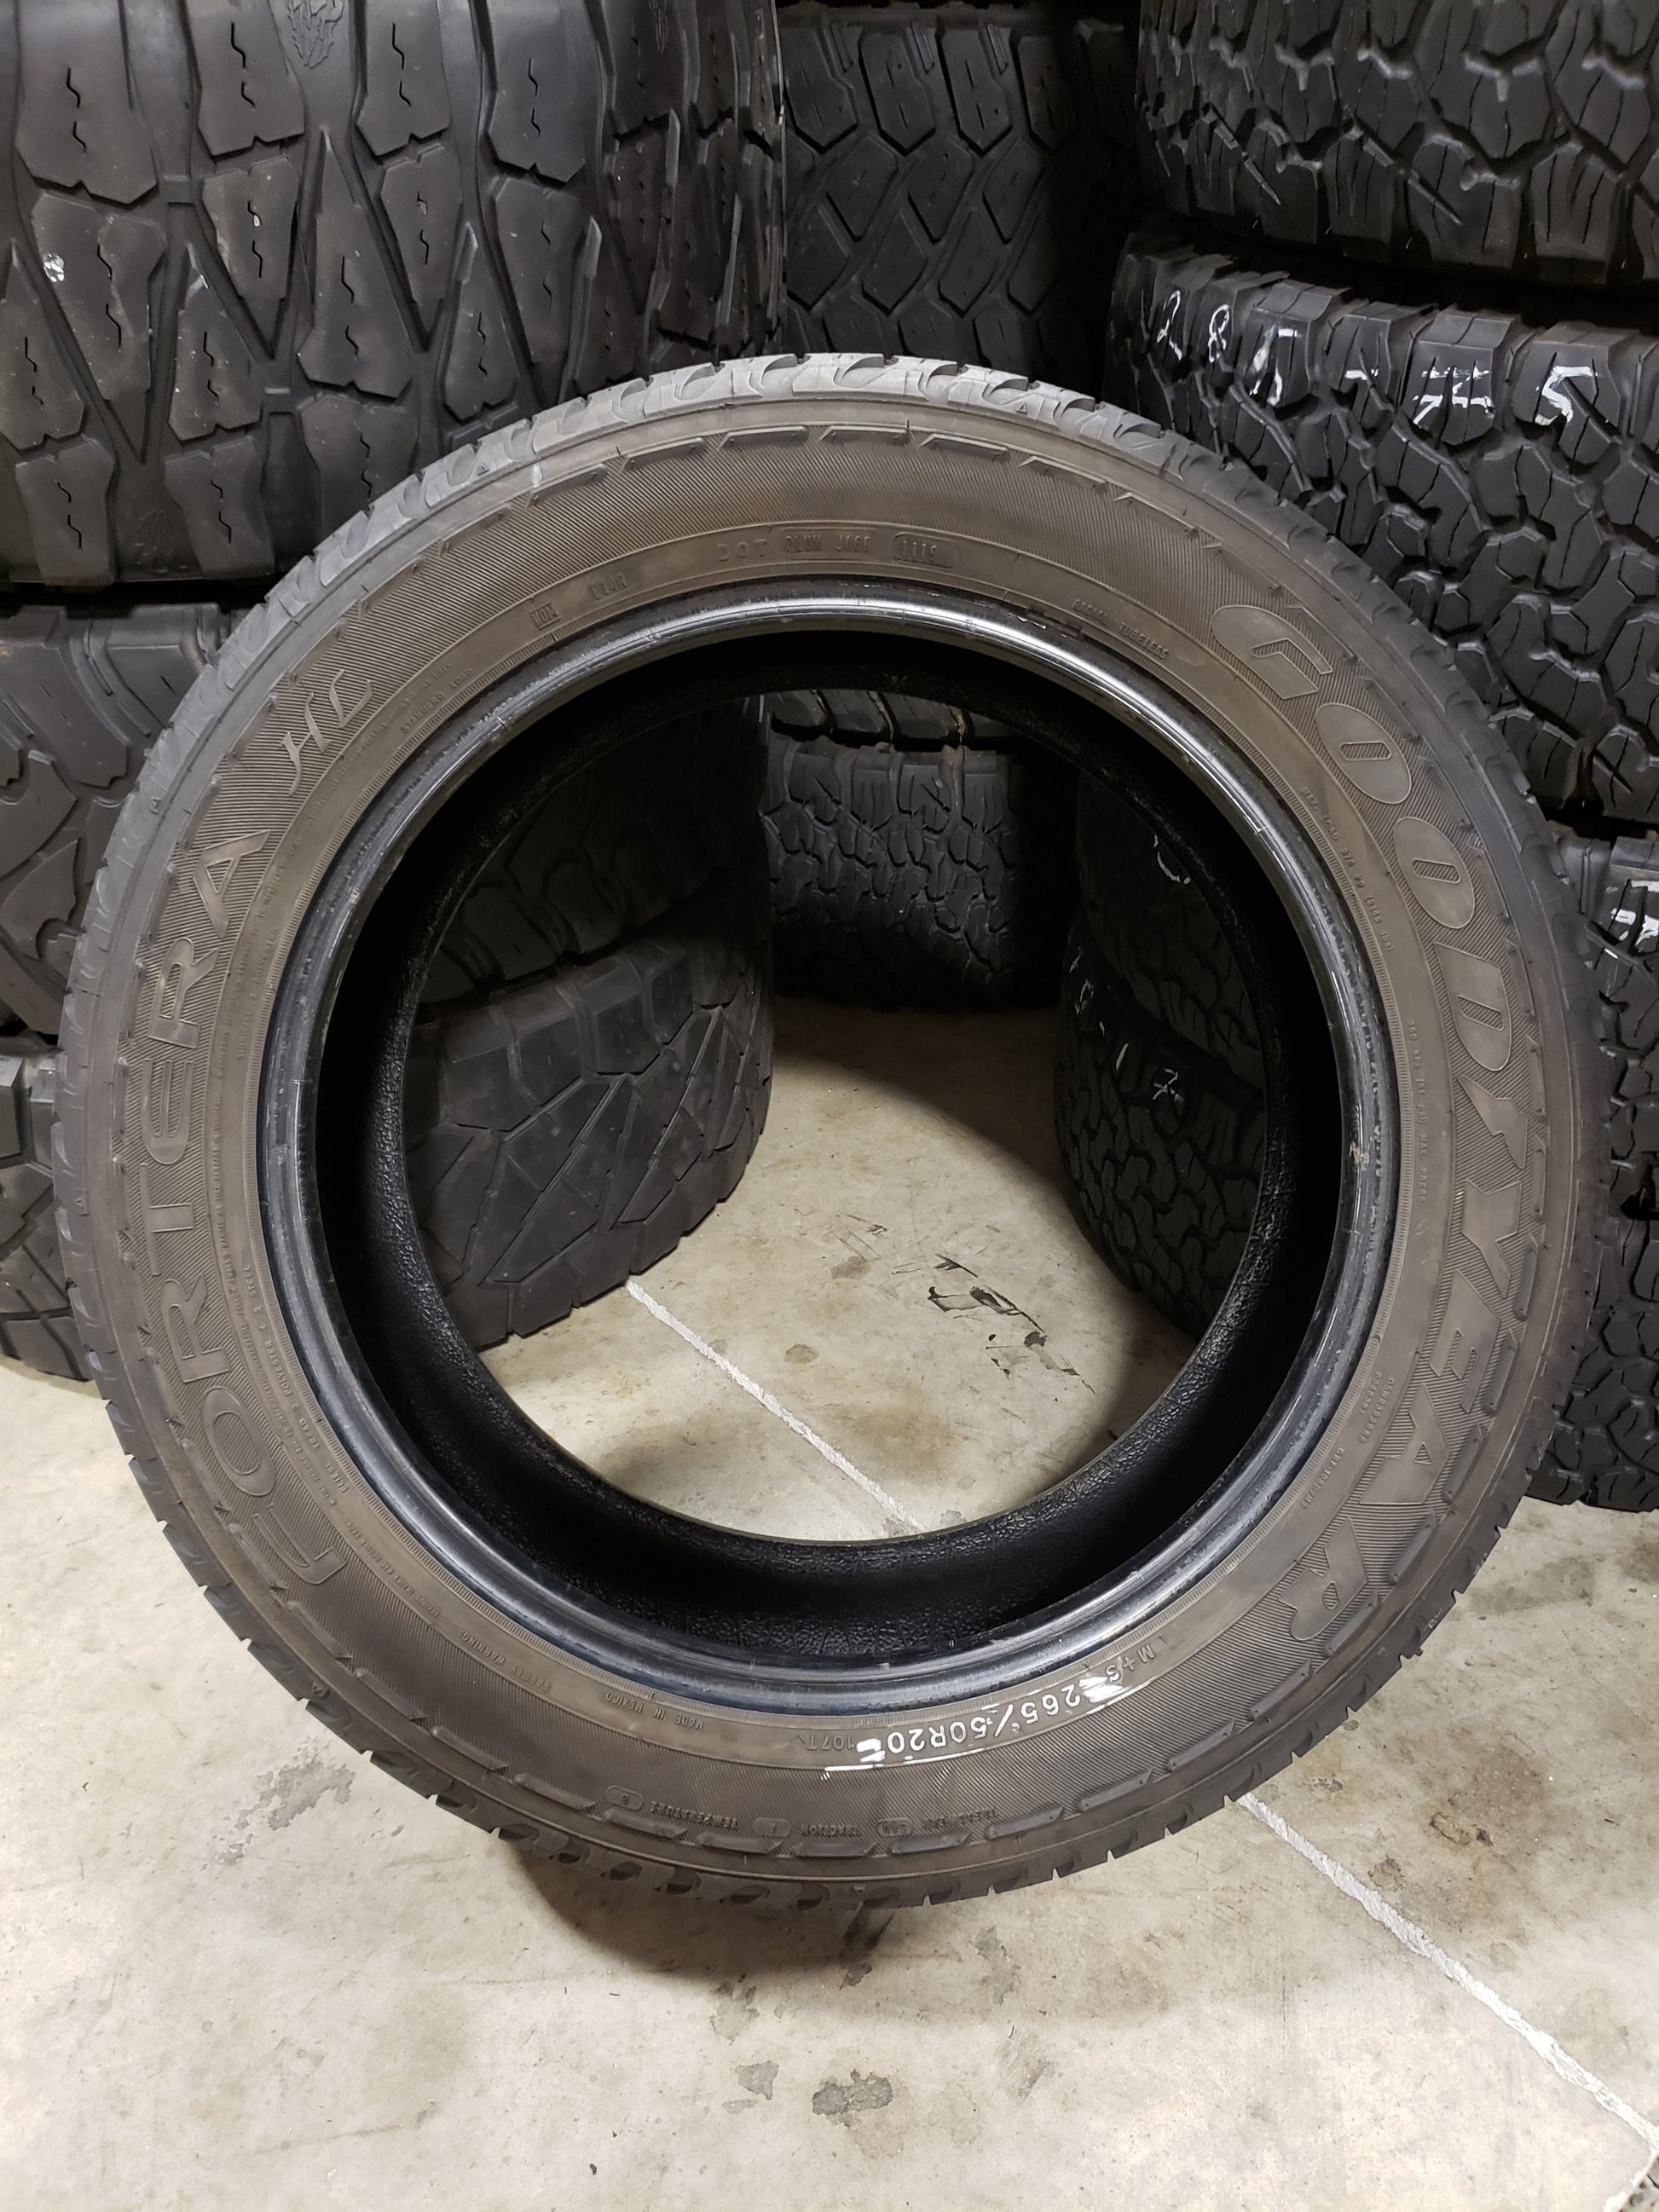 SINGLE 245/50R20 Goodyear Fortera HL 107 T SL - Used Tires